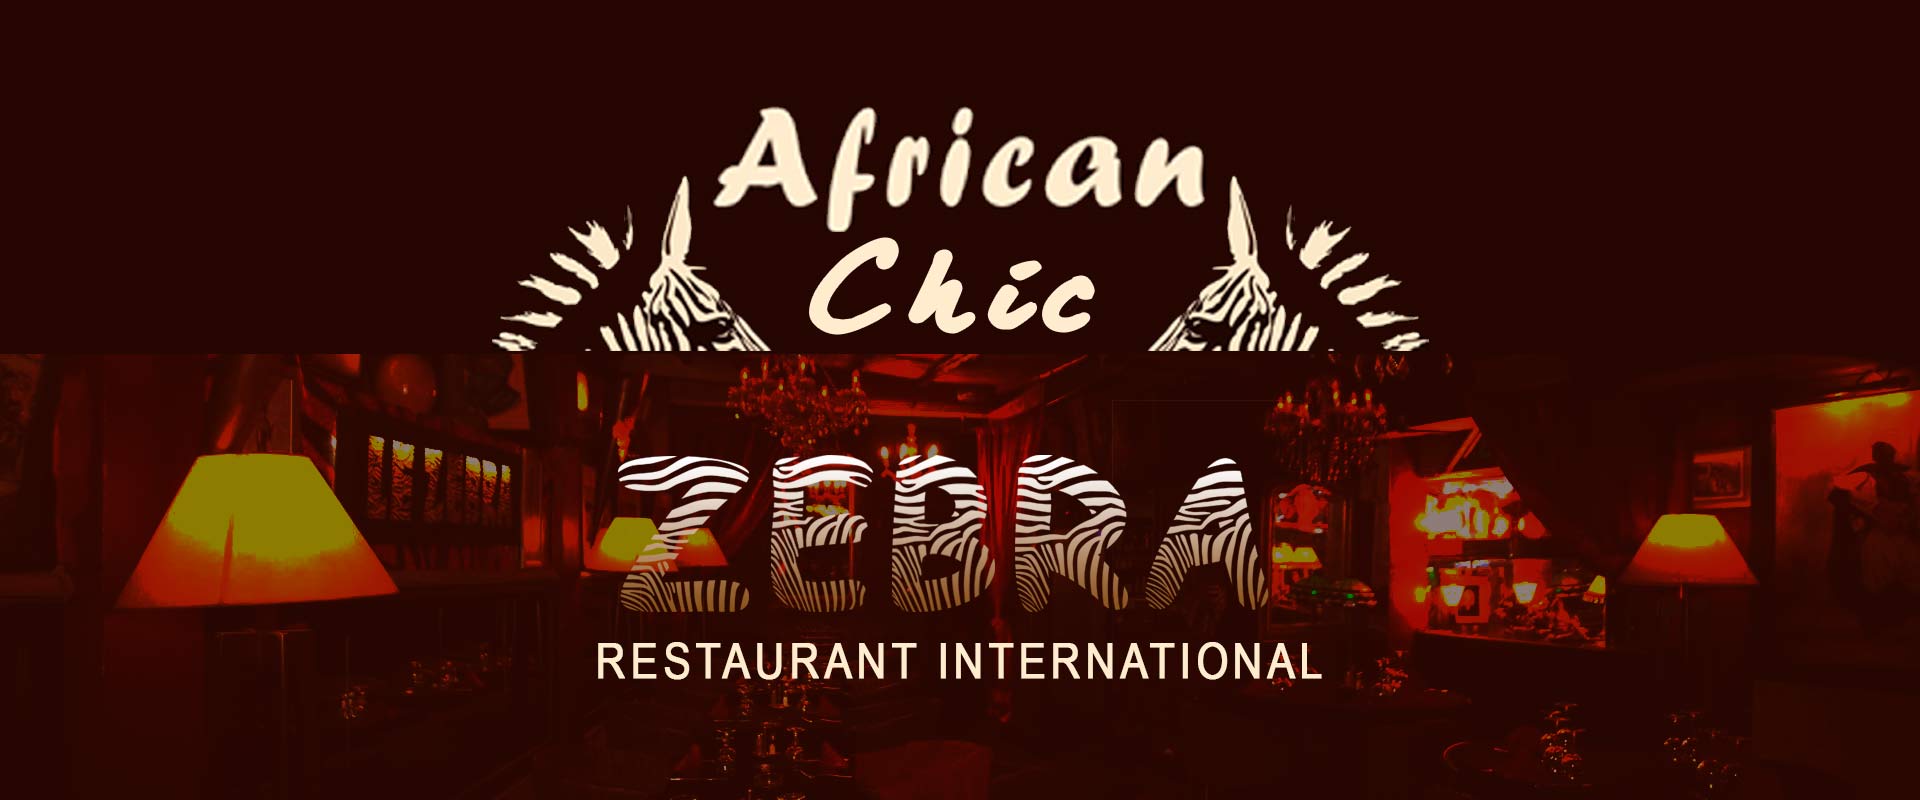 Restaurant African Chic Le Zebra Marrakech